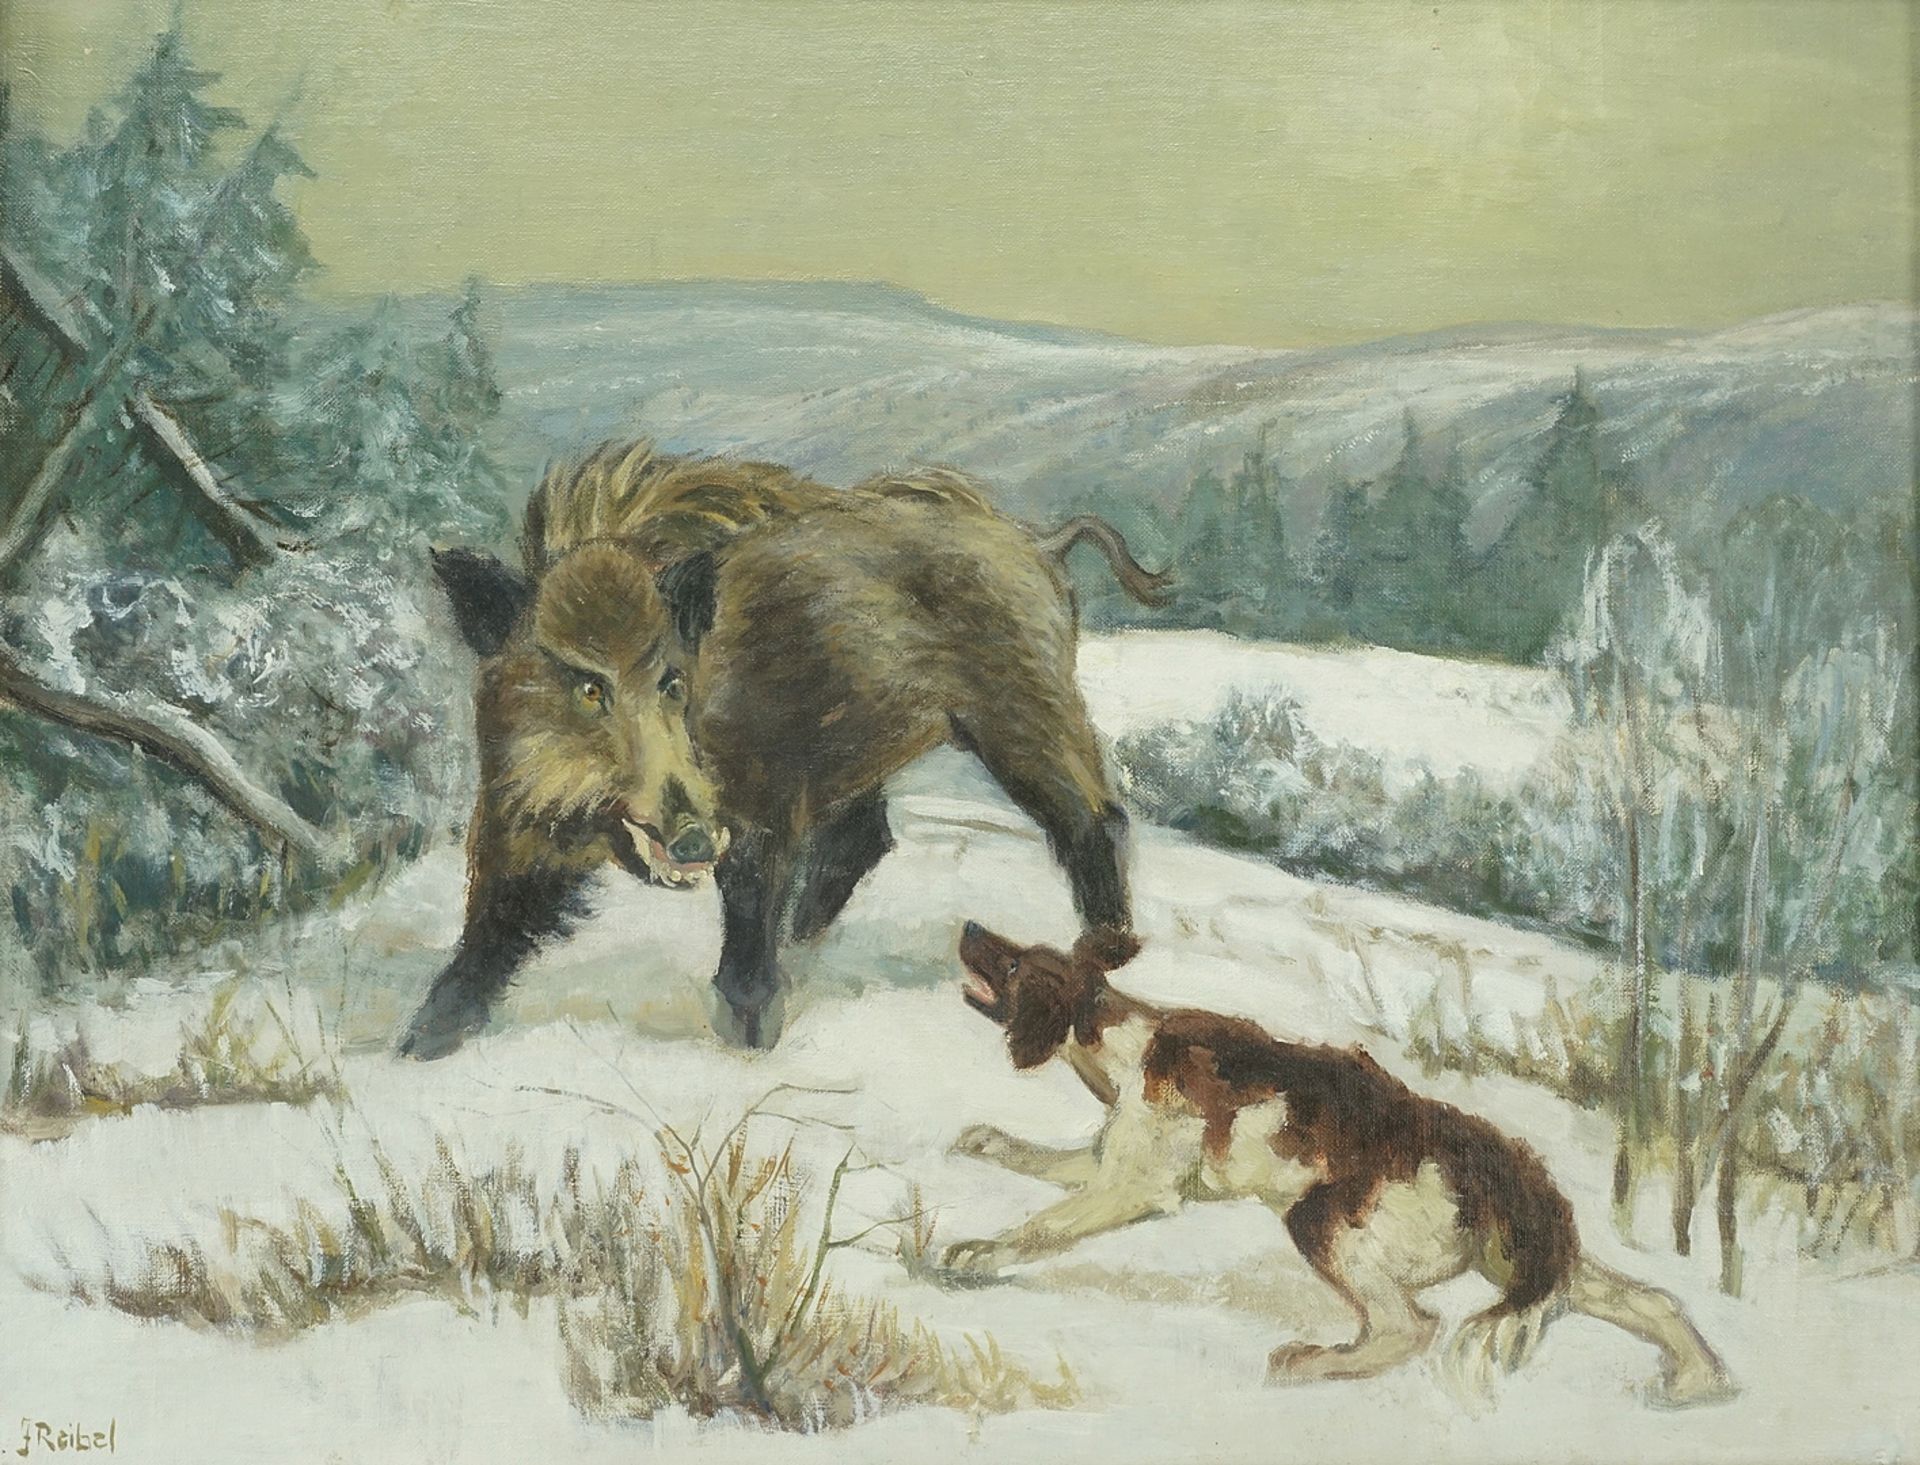 J. Reibel, Winter landscape with wild boar and dog